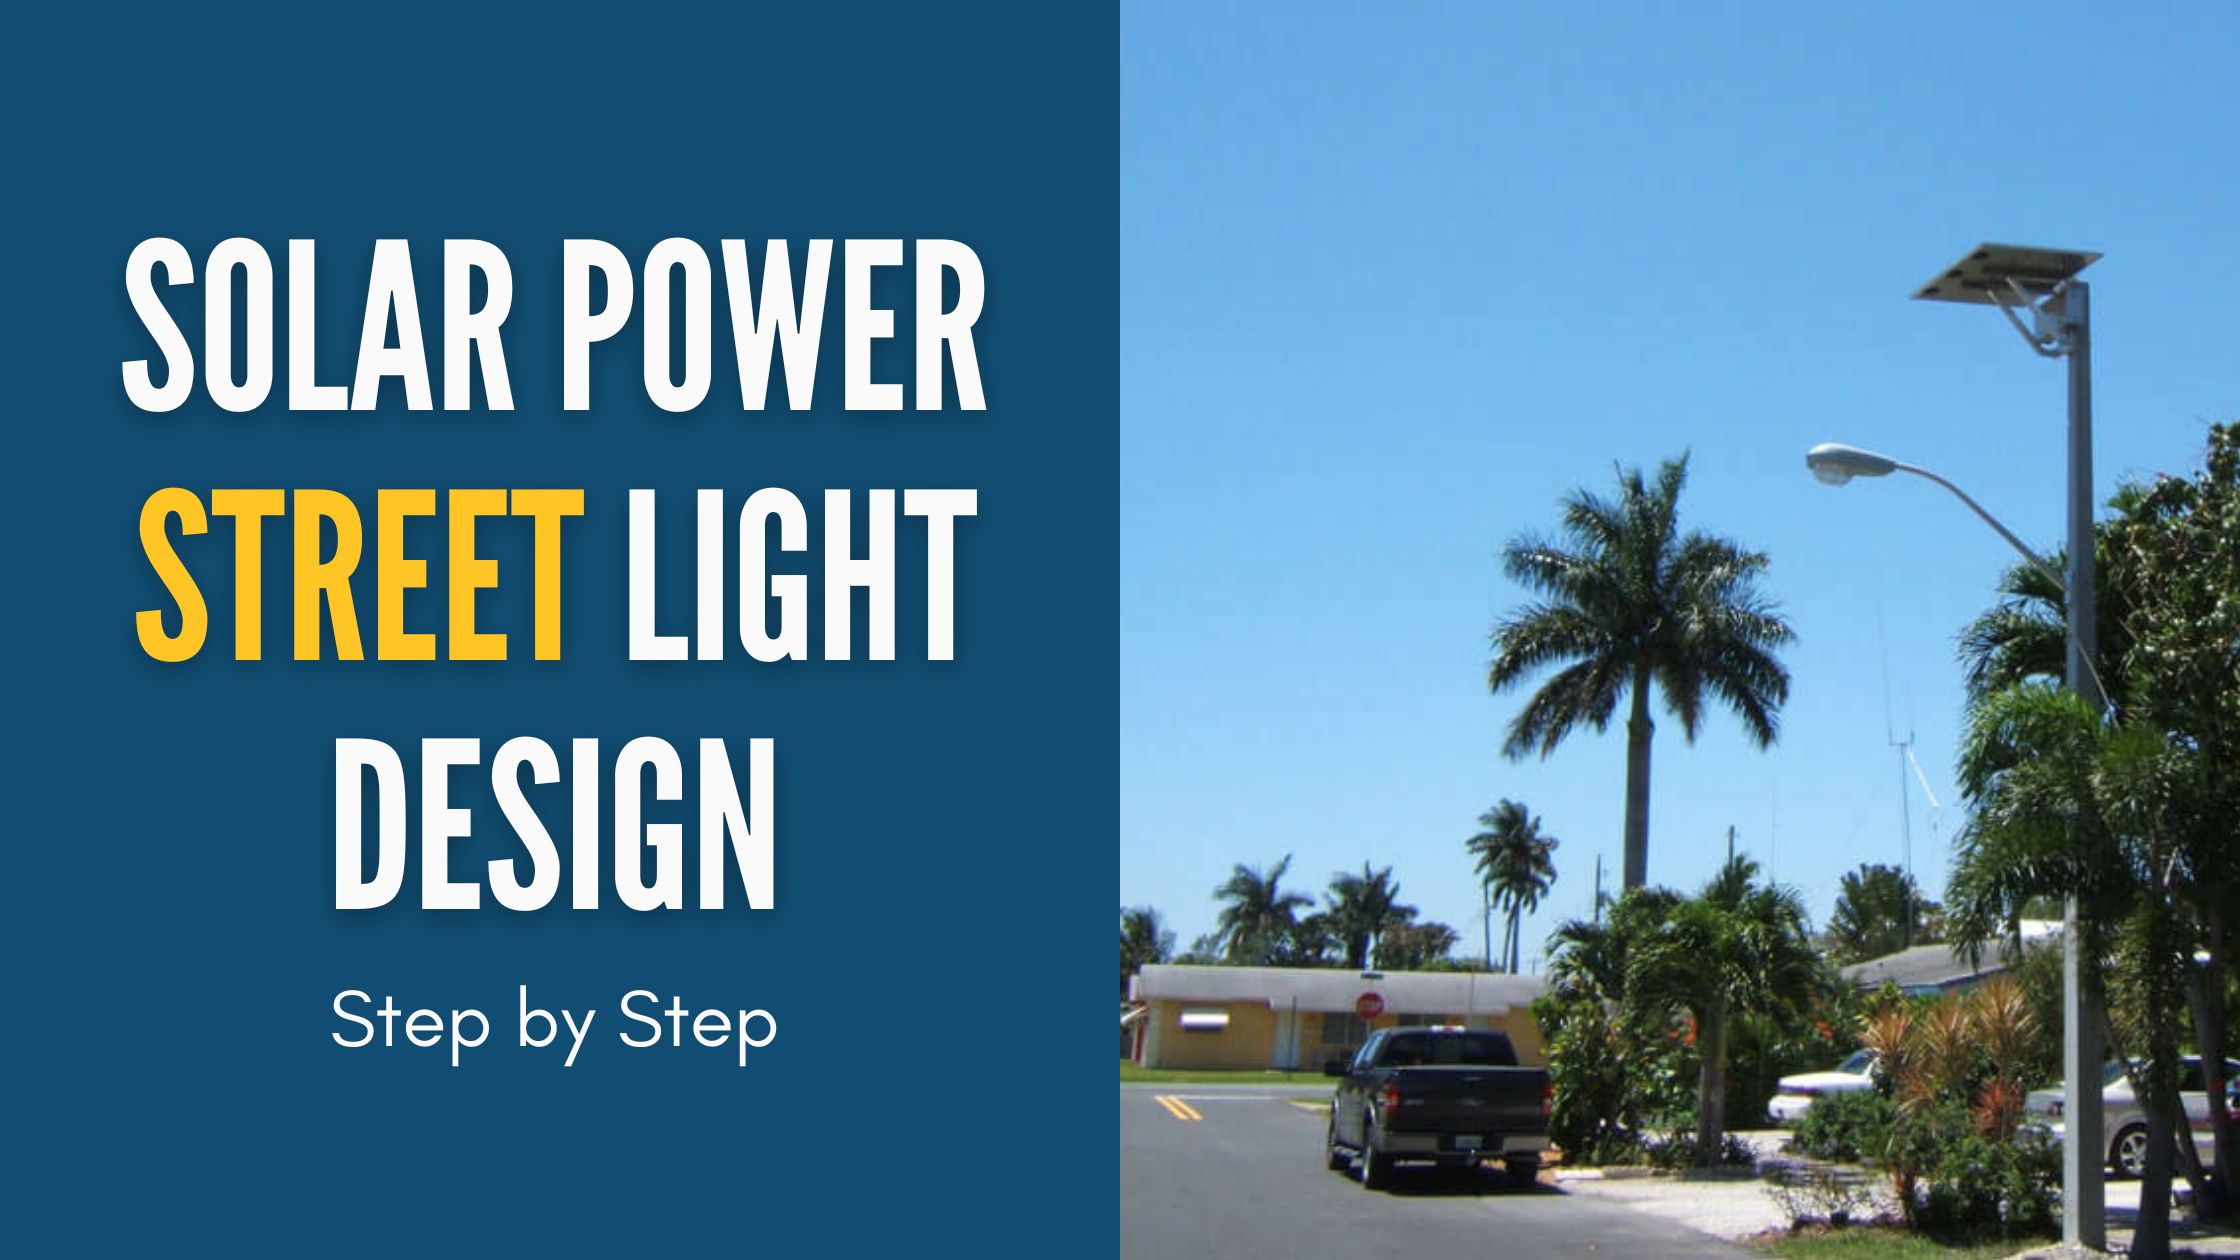 Solar Power Street Light Design: Step by Step